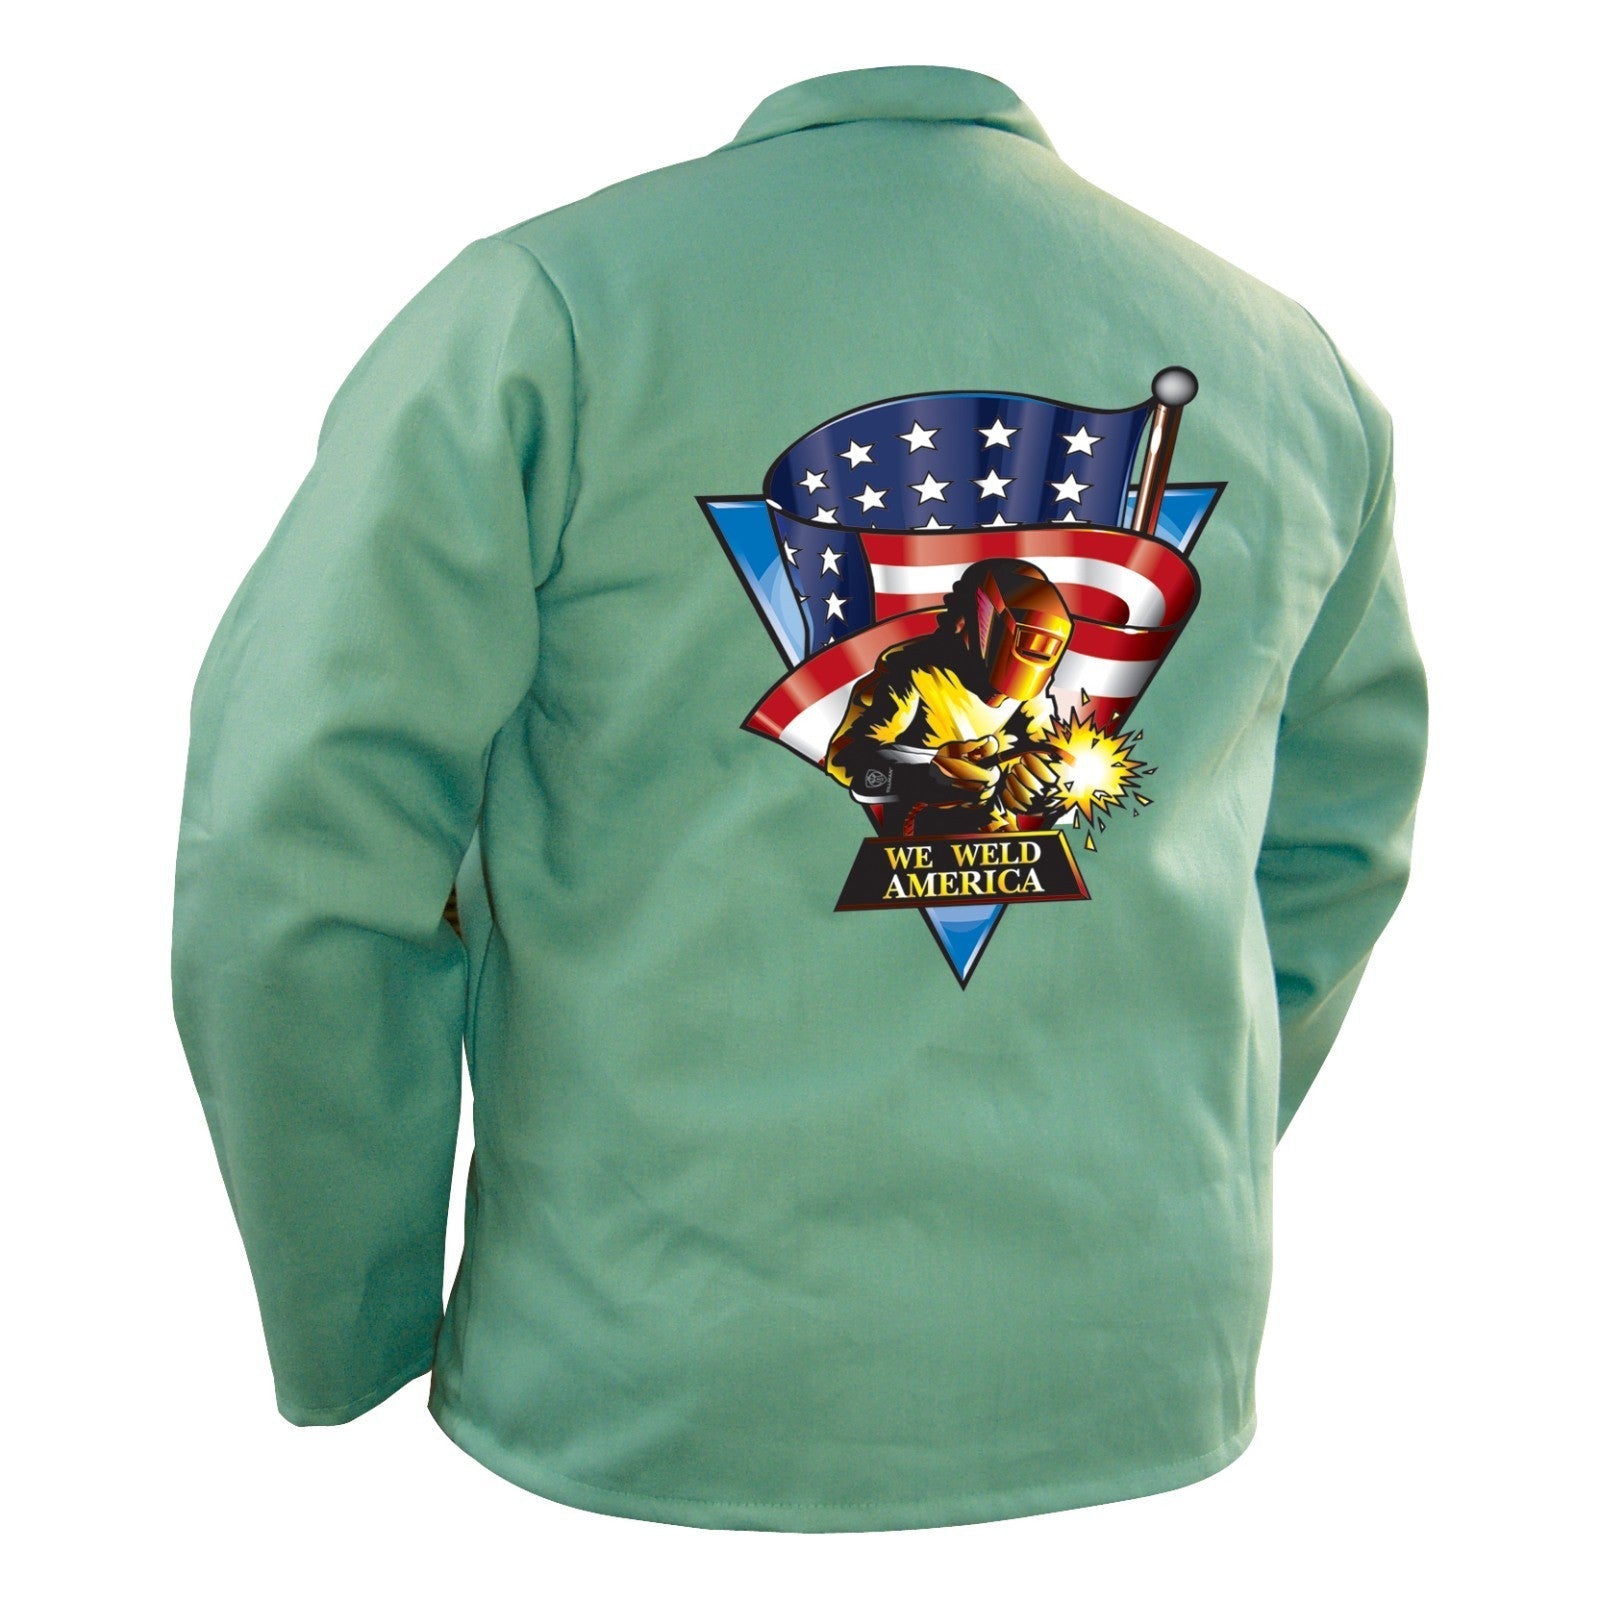 Tillman 9030 We Weld America FR Cotton Welding Jacket